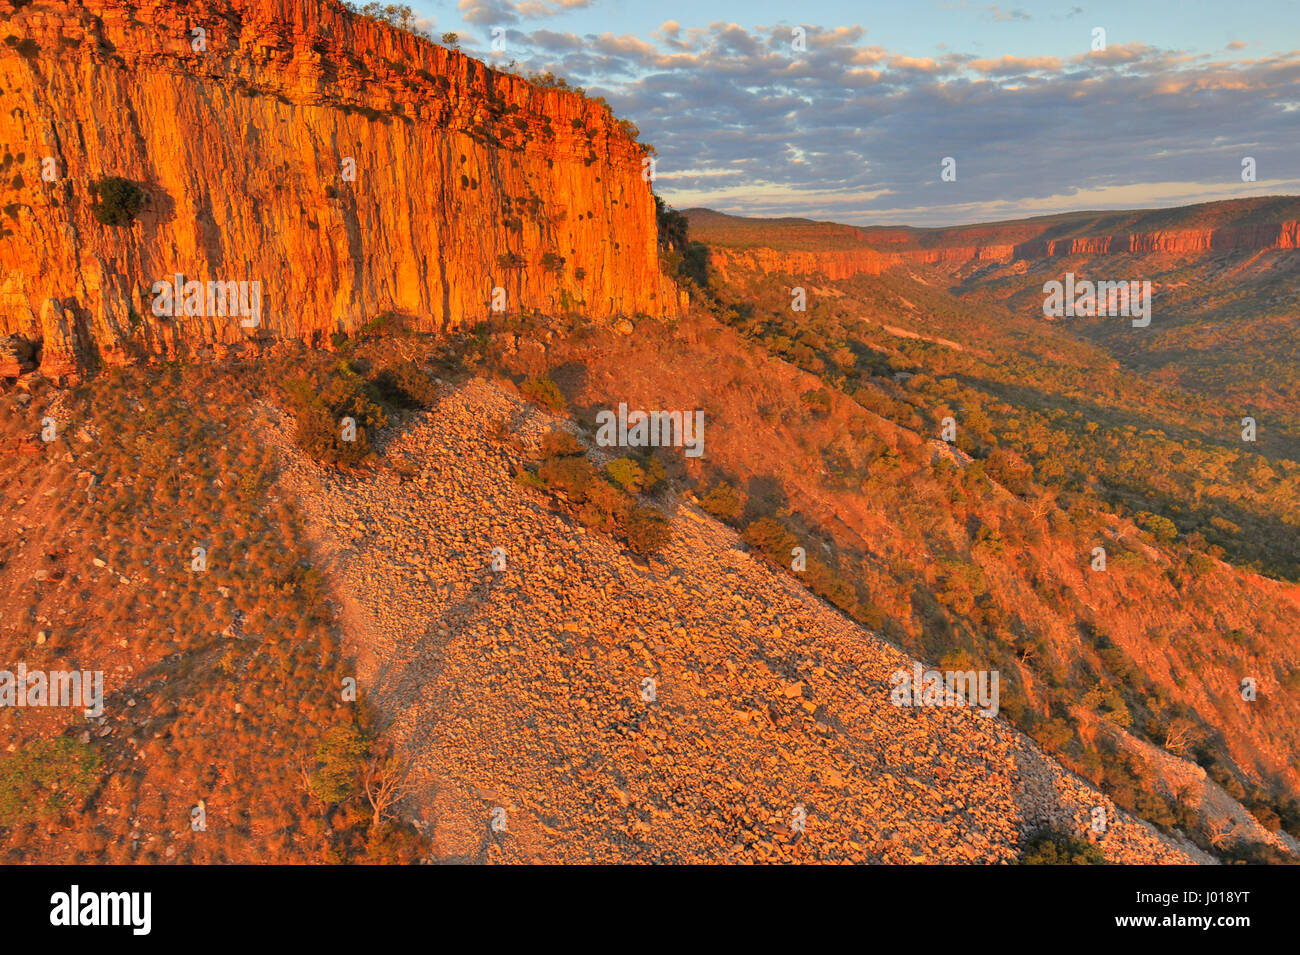 The red ochre rocks of the Kimberley region of Western Australia. Stock Photo